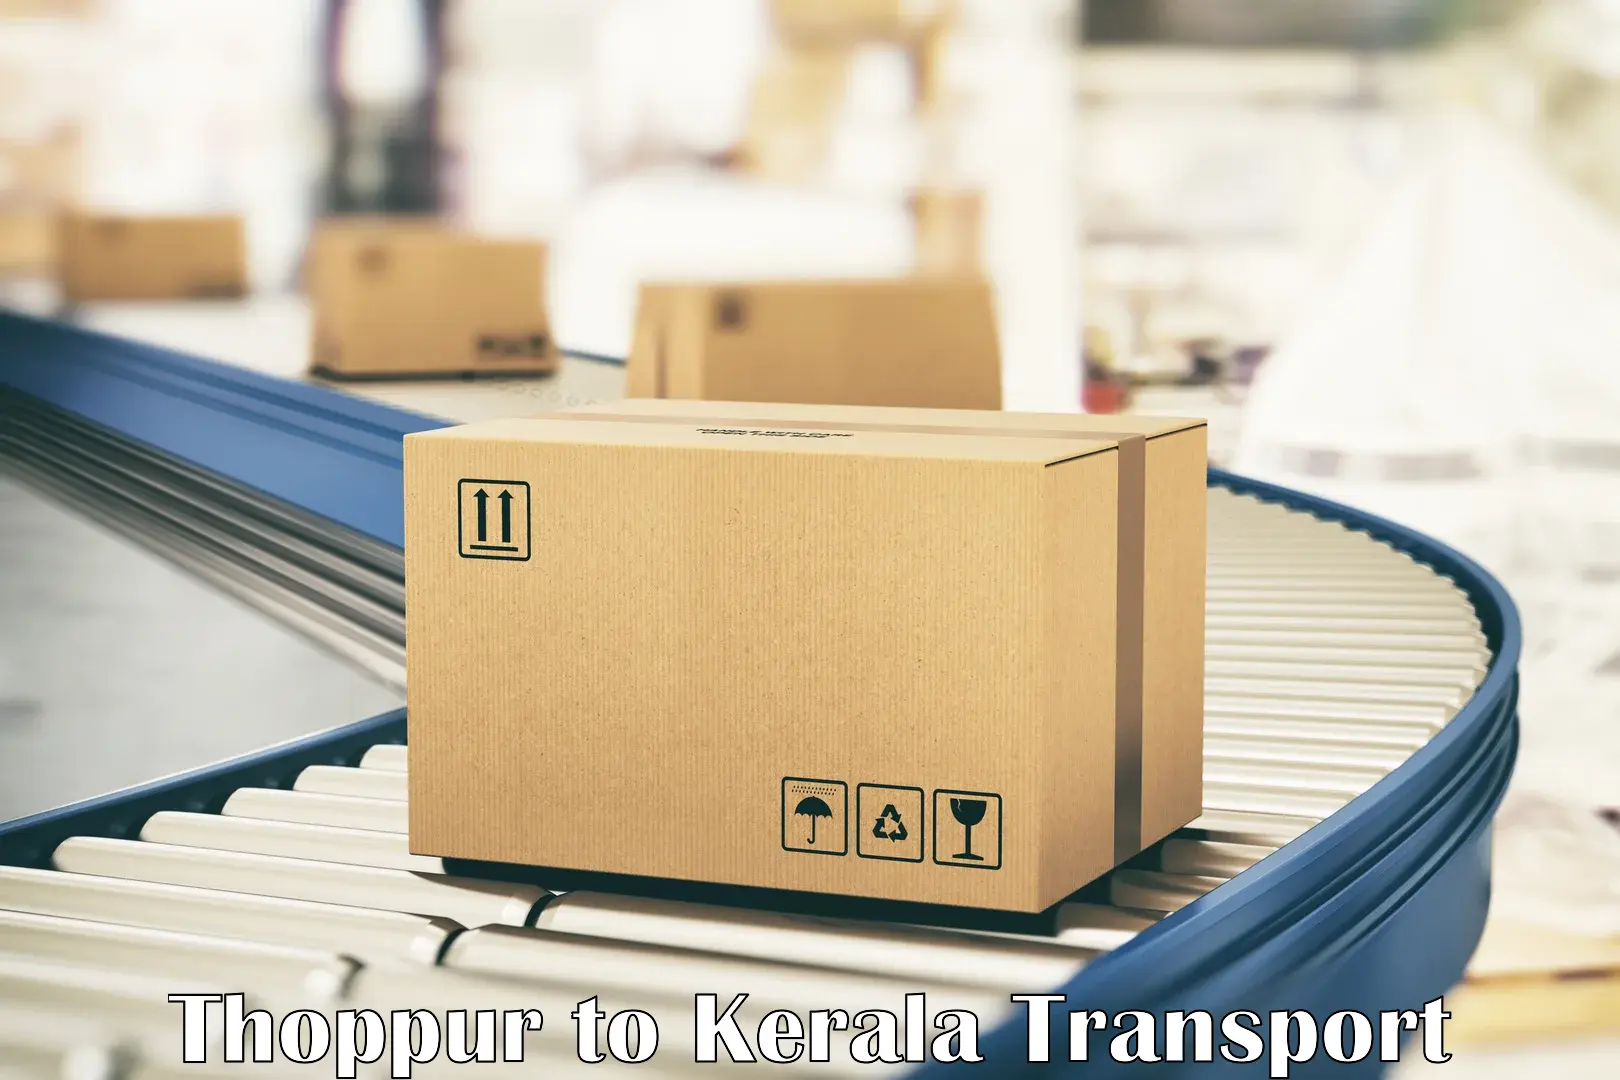 Online transport service Thoppur to Malappuram